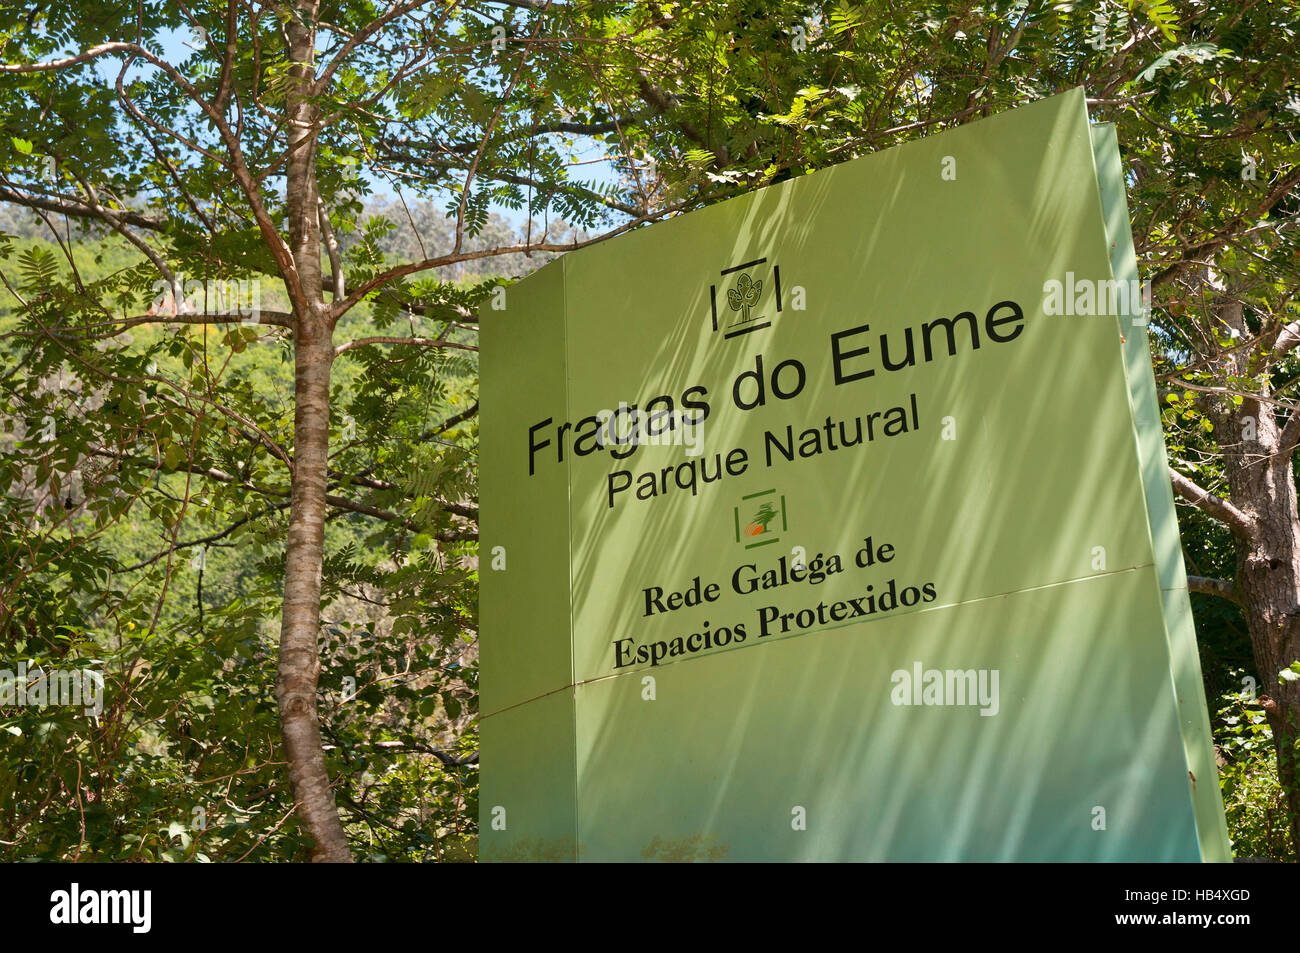 Fragas do Eume Natural Park - poster, Pontedeume, La Coruña province, Region of Galicia, Spain, Europe Stock Photo